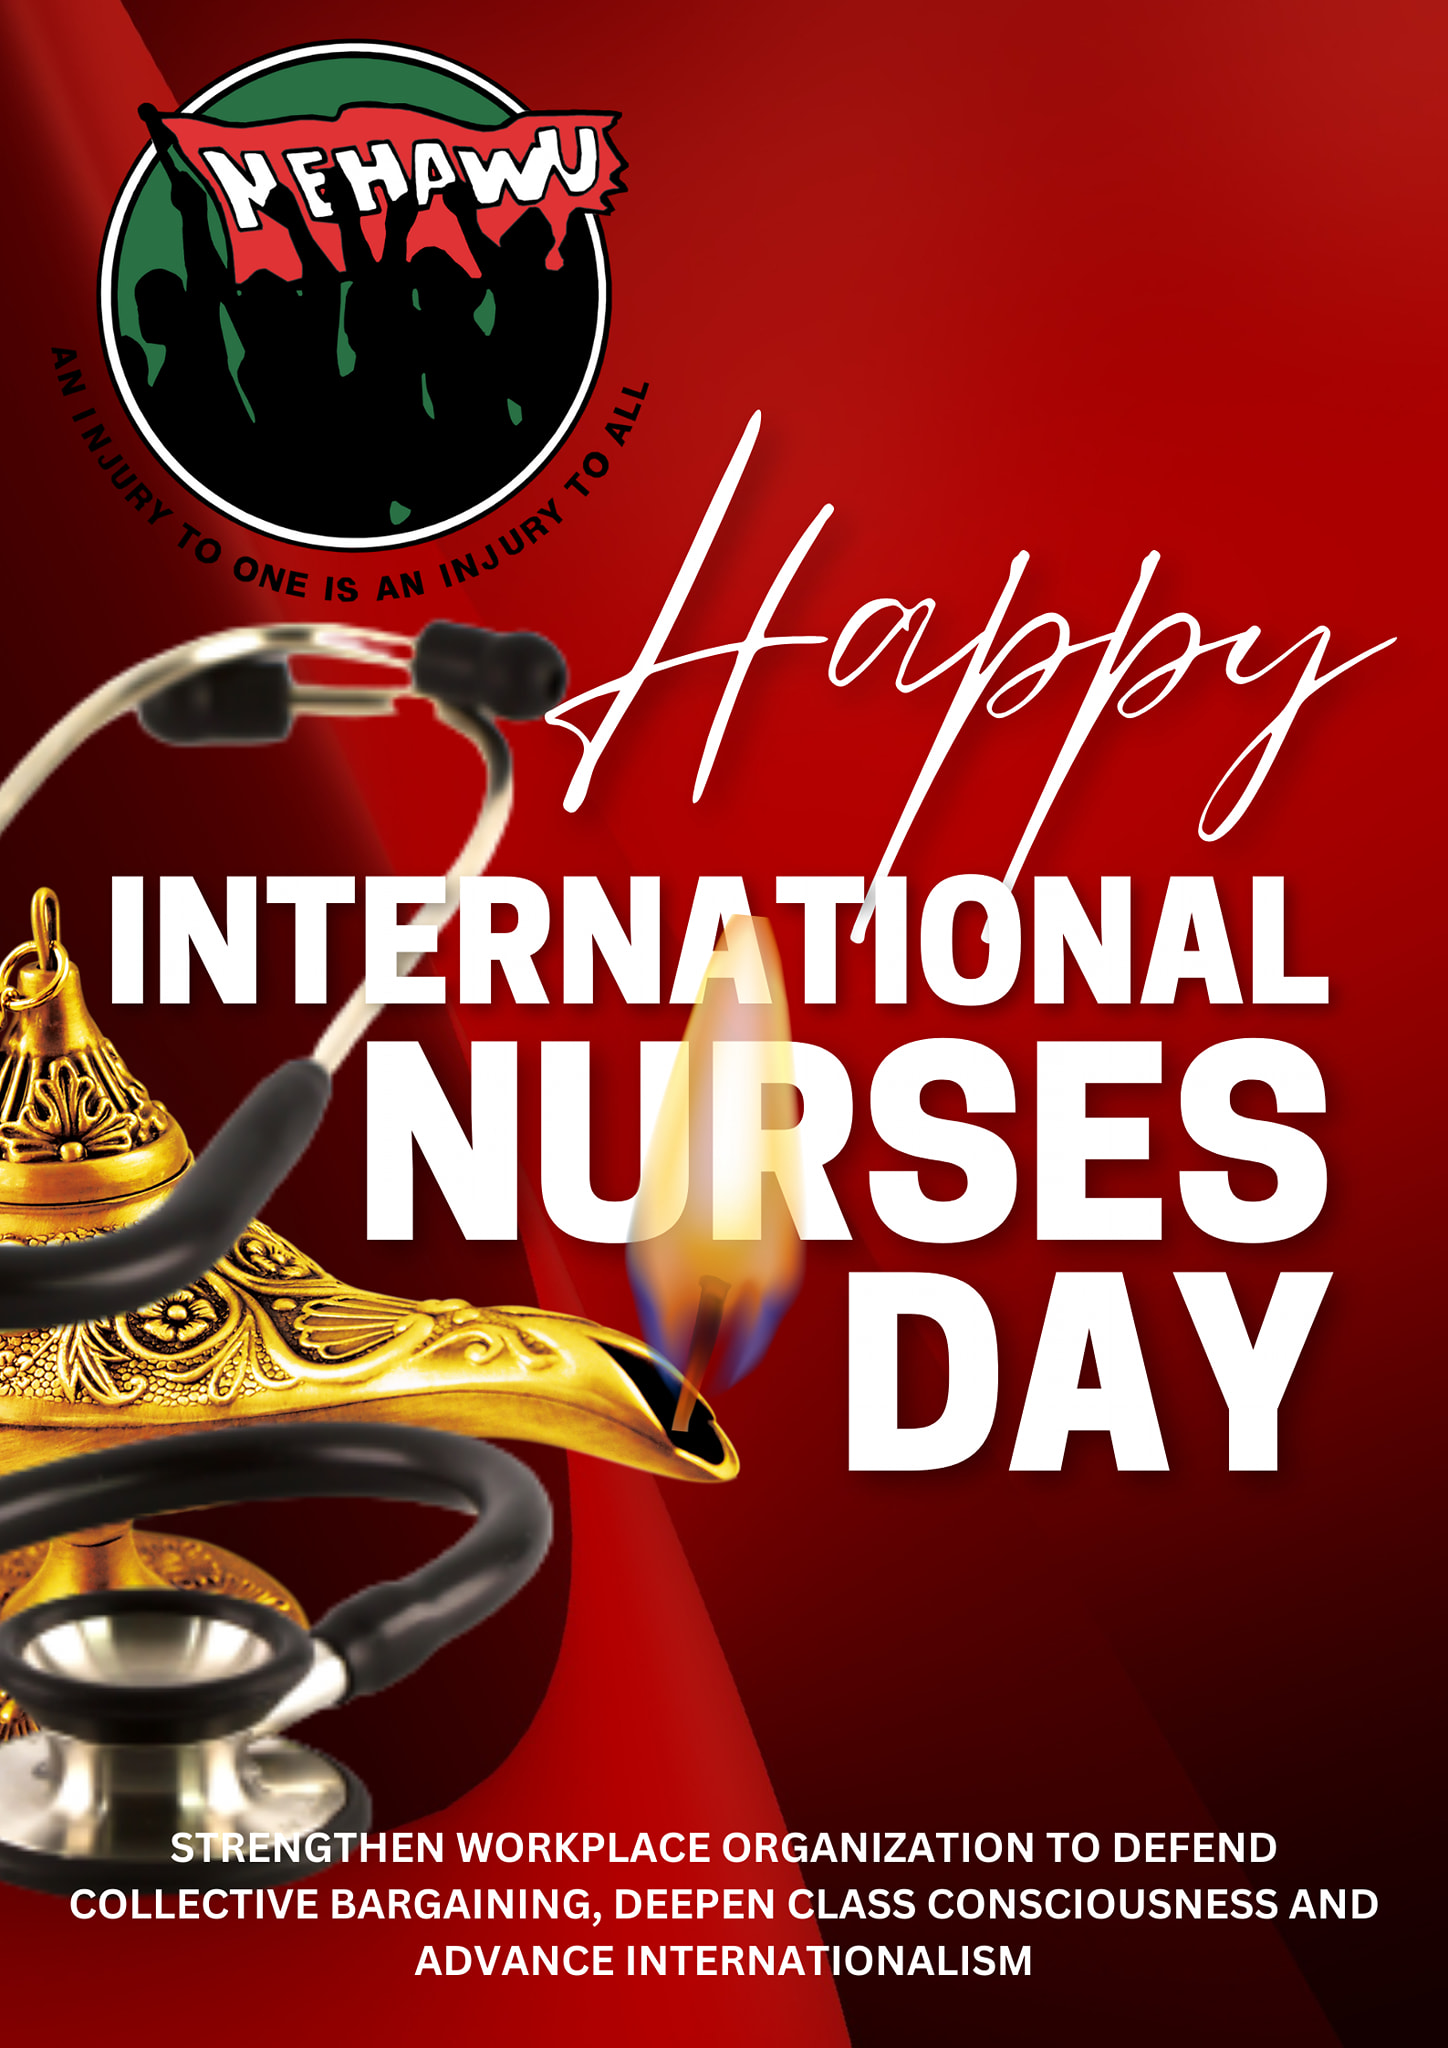 NEHAWU wishes Nurses a happy International Day